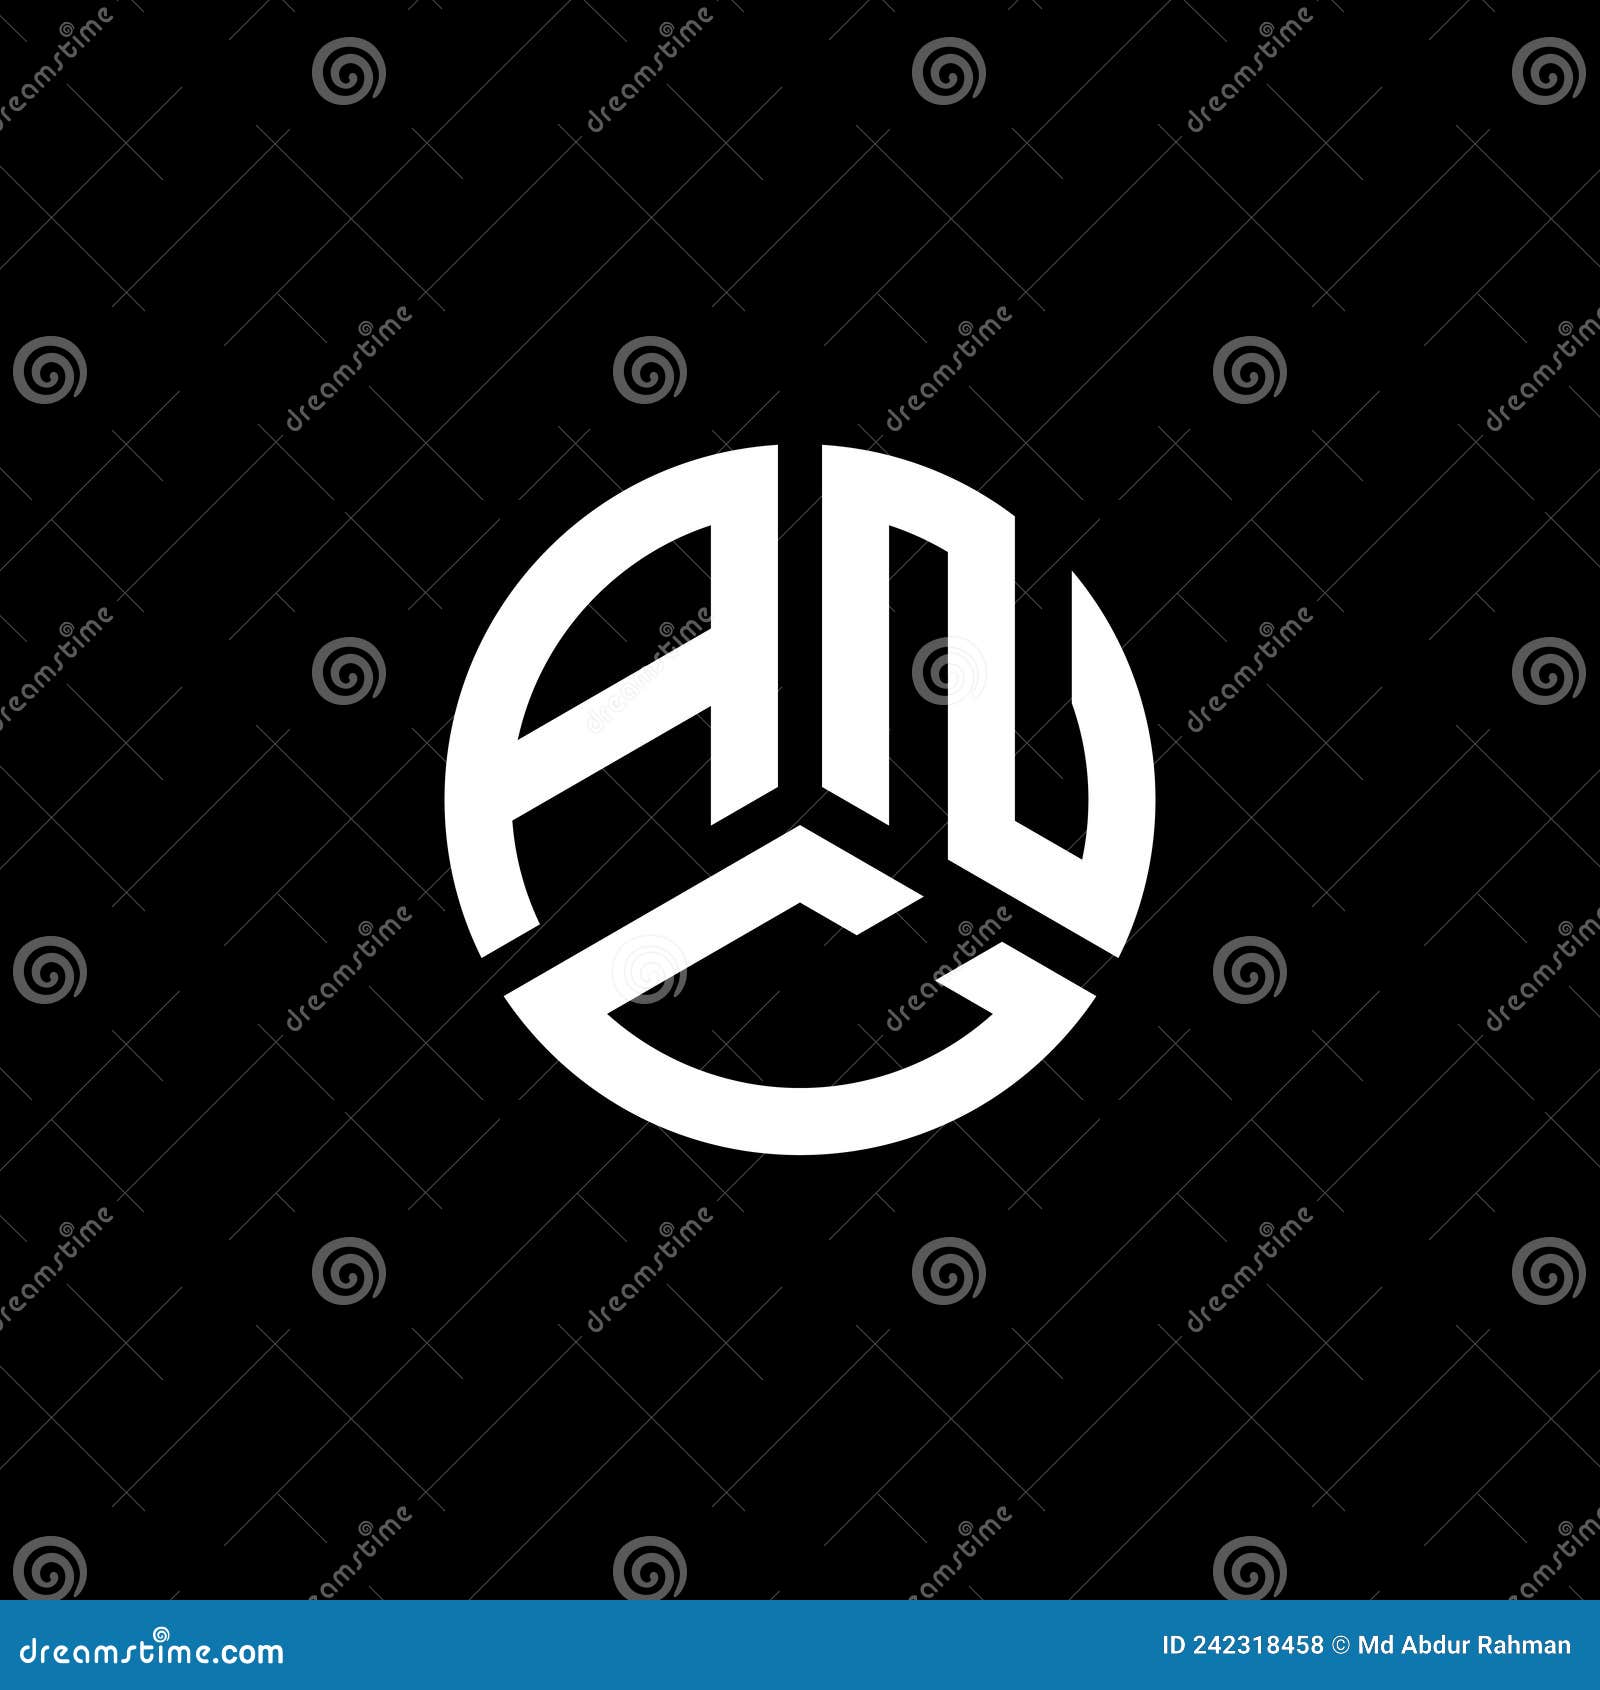 anc letter logo  on white background. anc creative initials letter logo concept. anc letter 